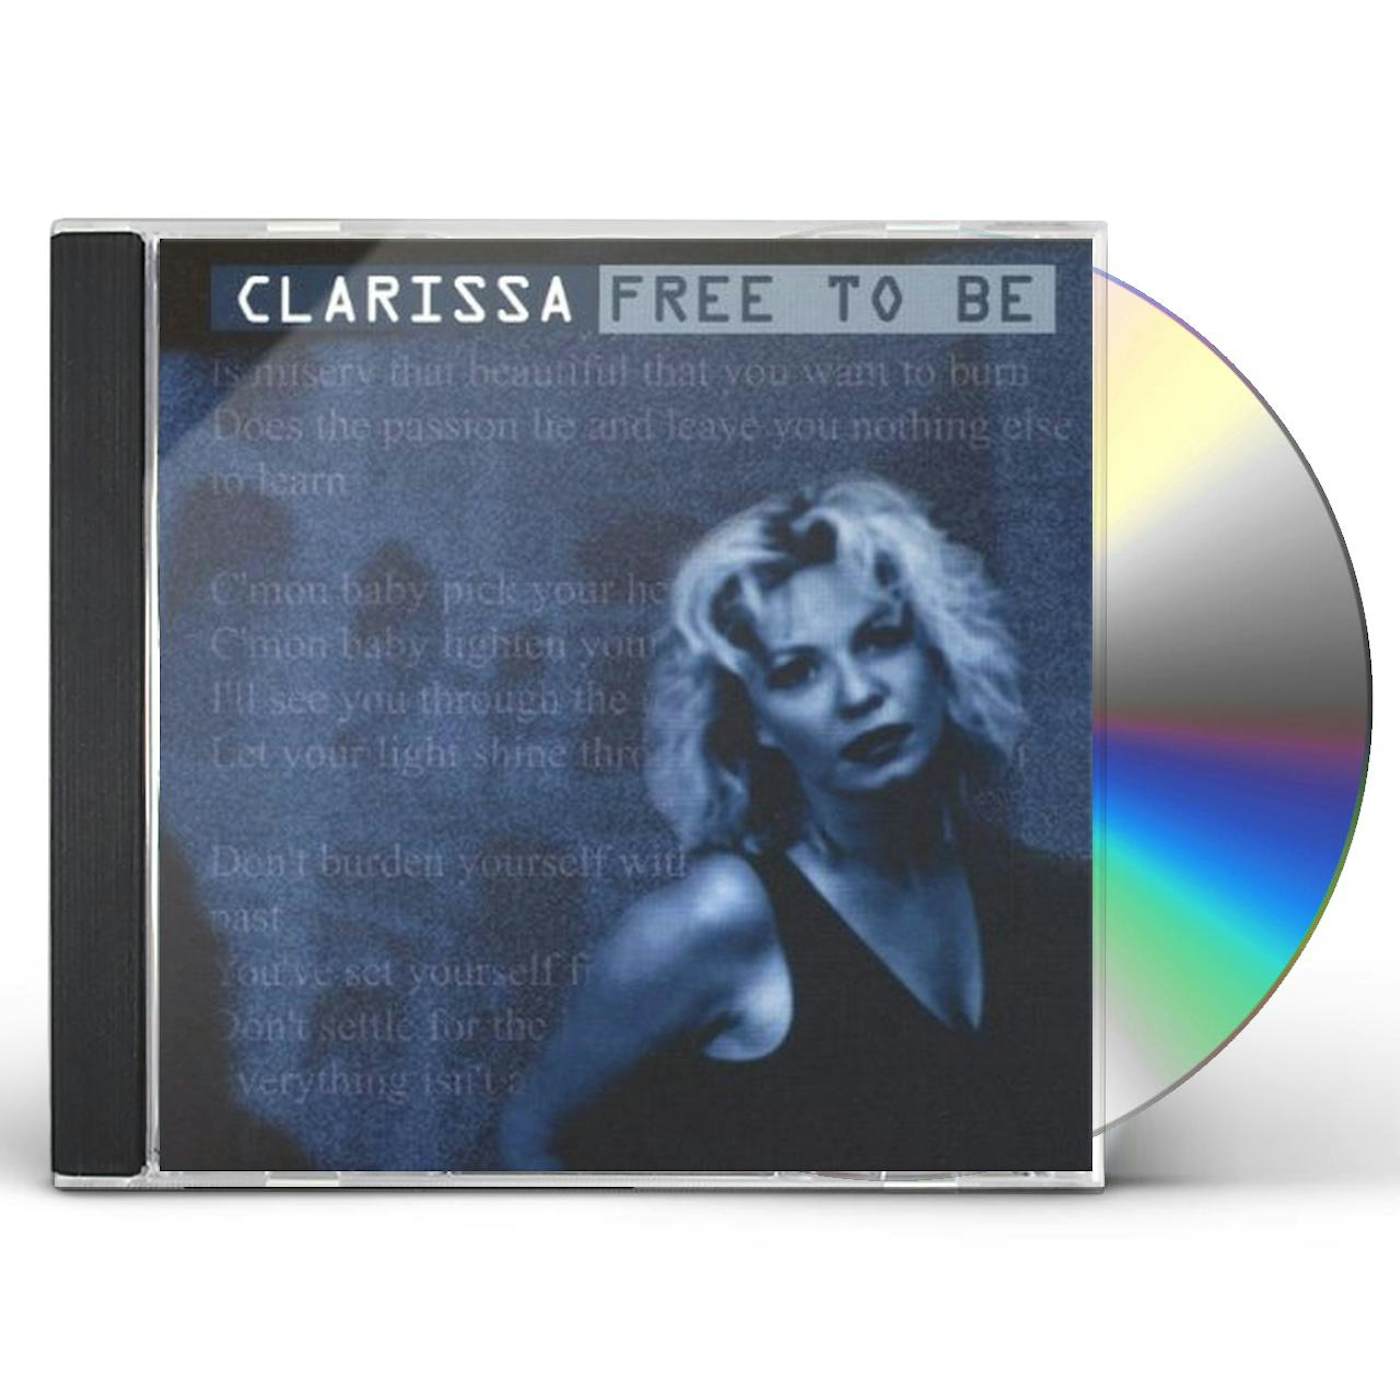 Clarissa FREE TO BE CD